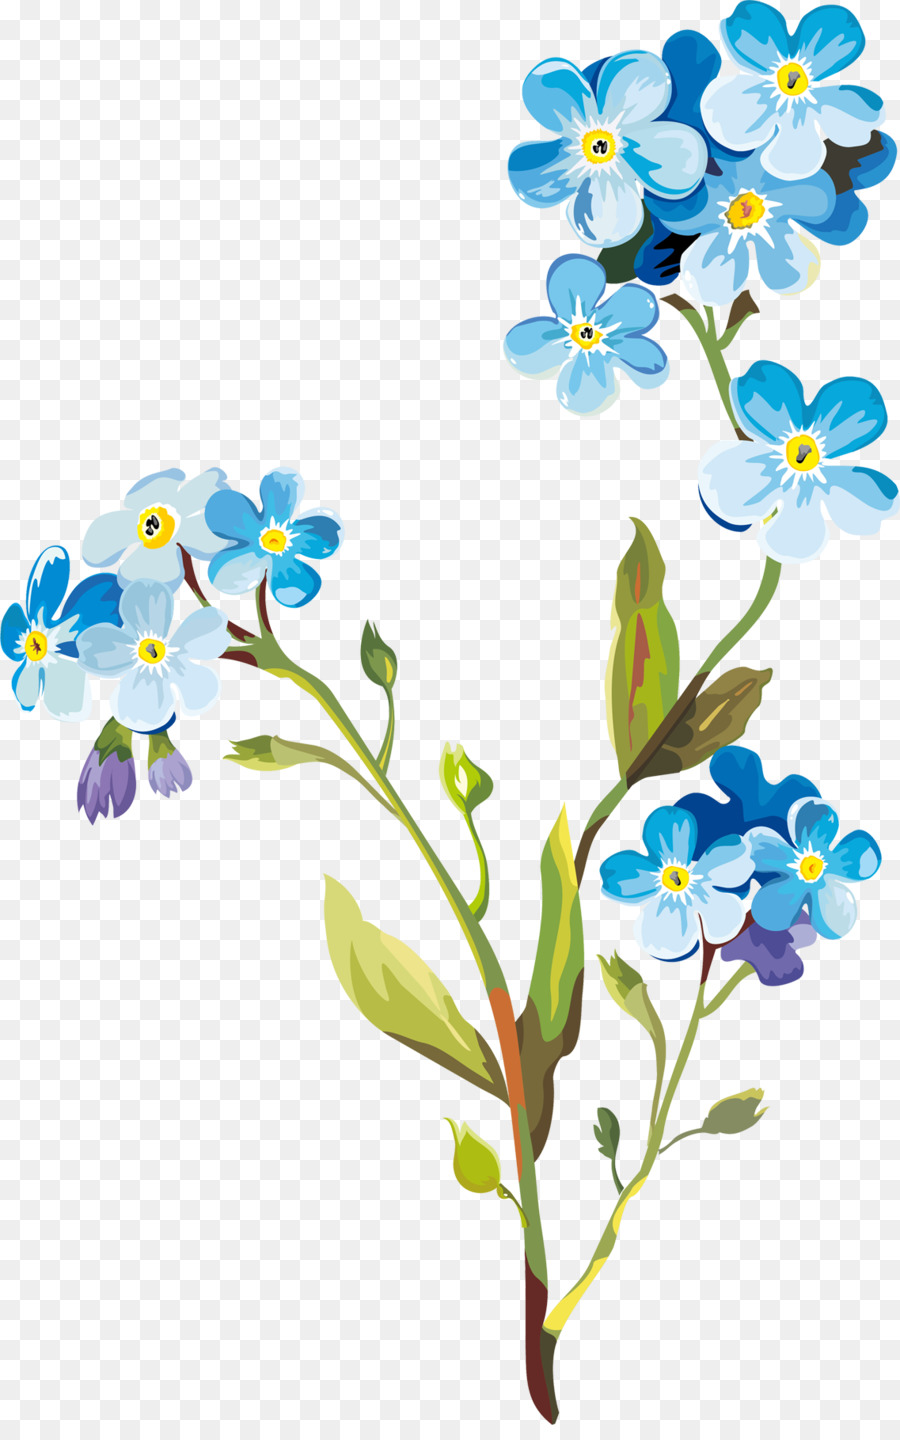 Flower Drawing Clip art - spring flowers png download - 1137*1800 - Free Transparent Flower png Download.